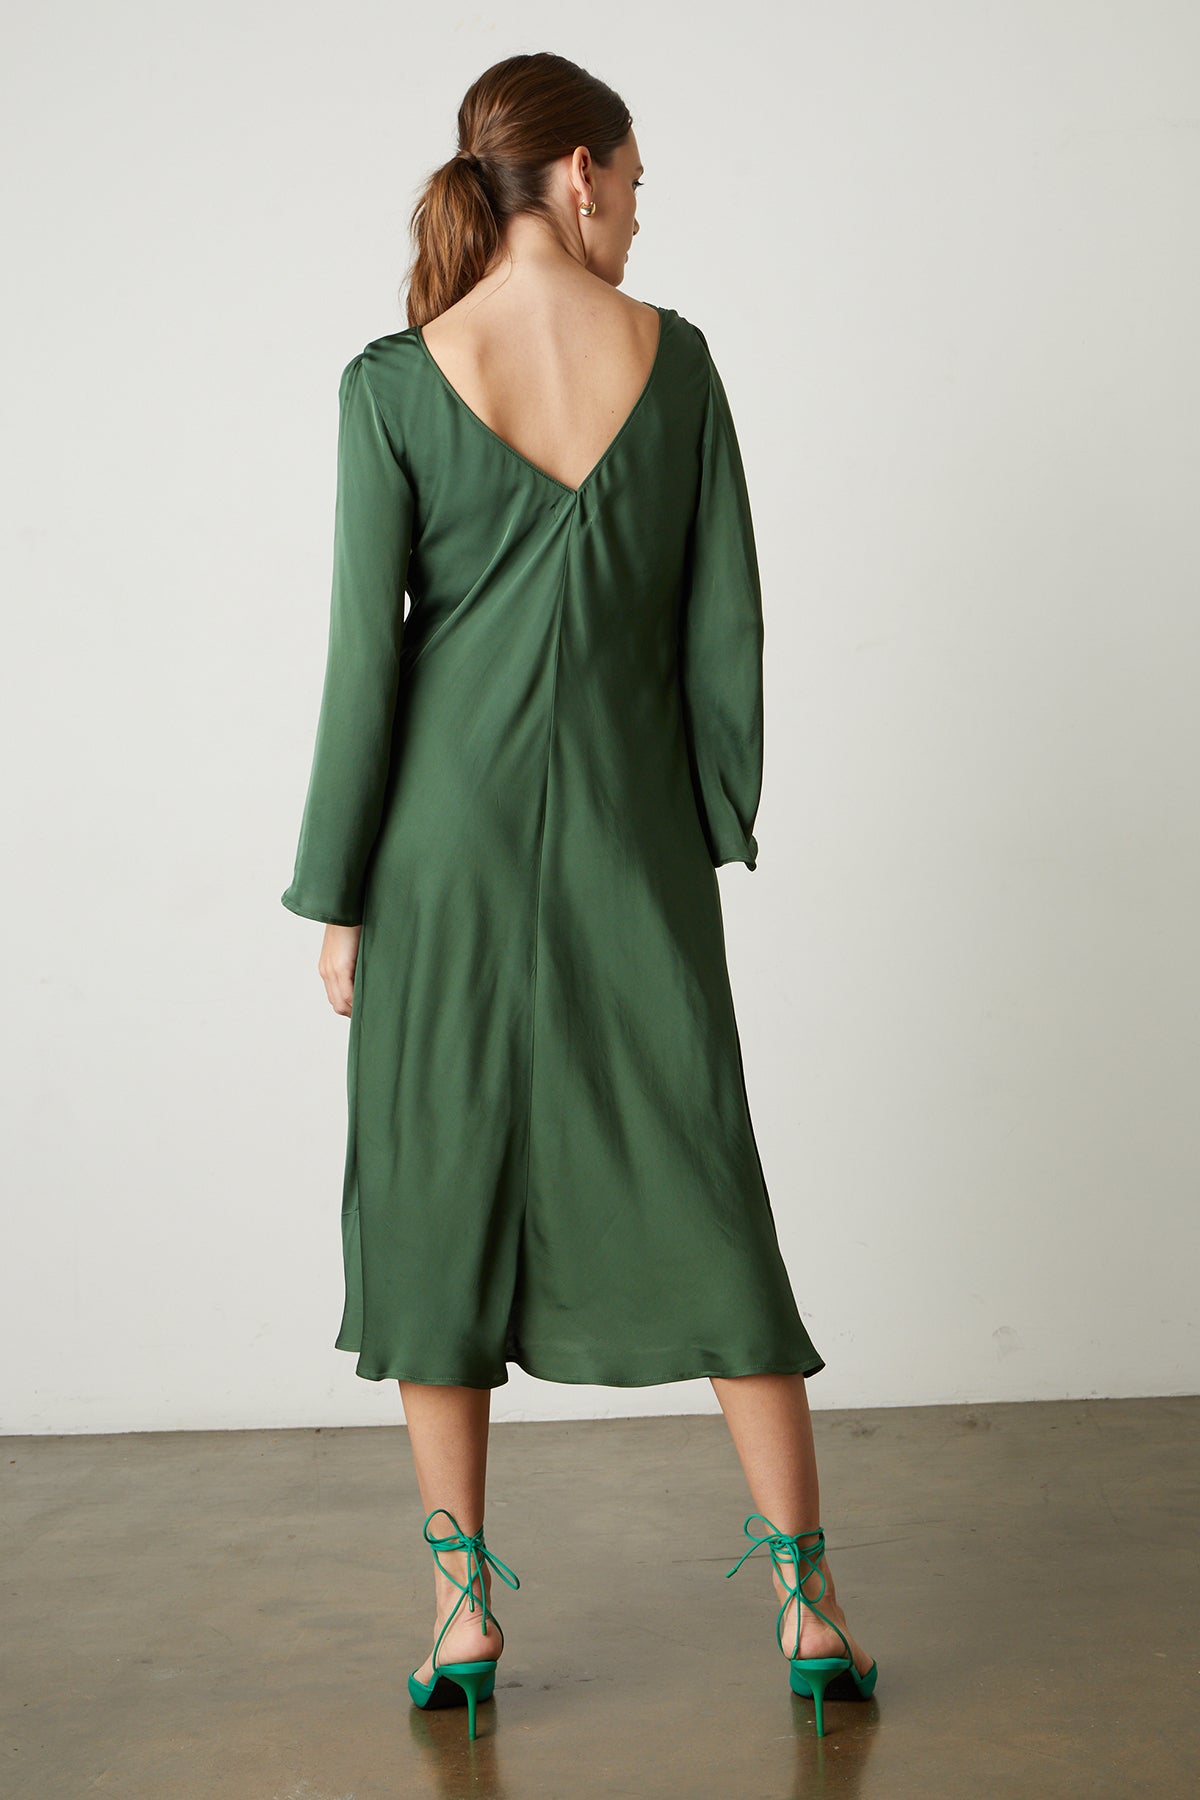 Catherine Satin Midi Dress in fern green full length back-25668993876161